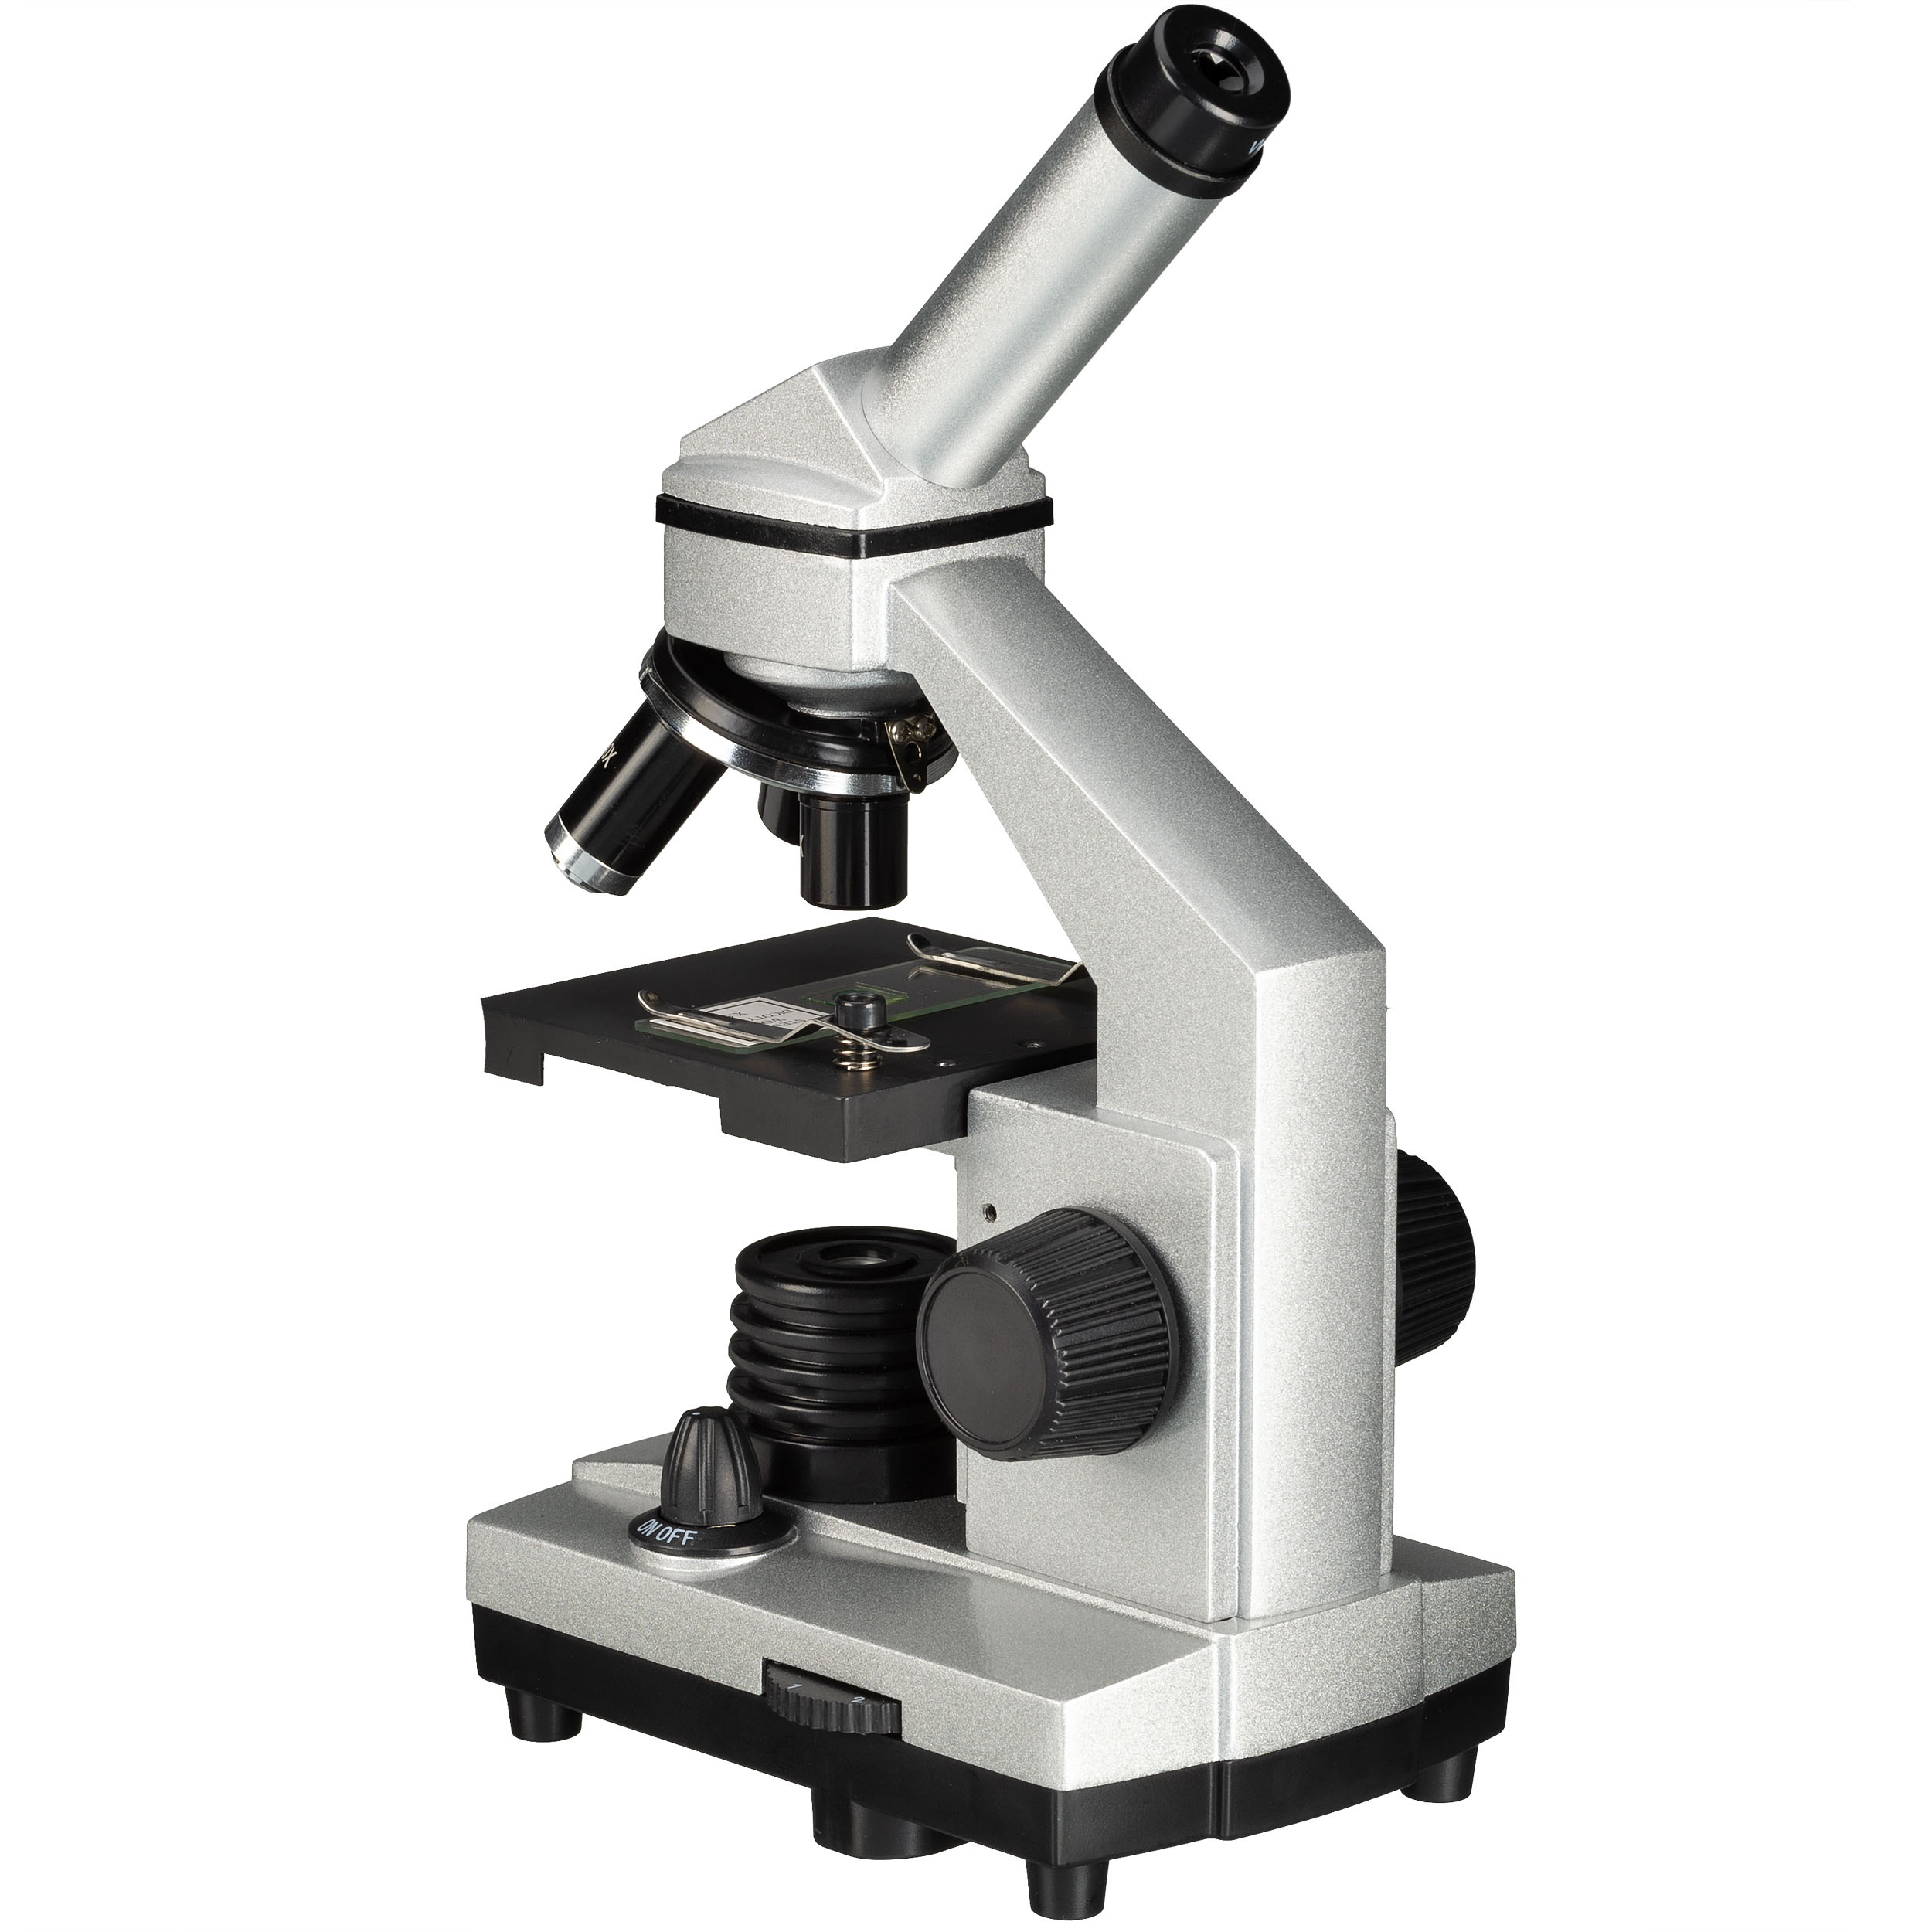 BRESSER JUNIOR 40x-1024x Microscope with HD Eyepiece Camera